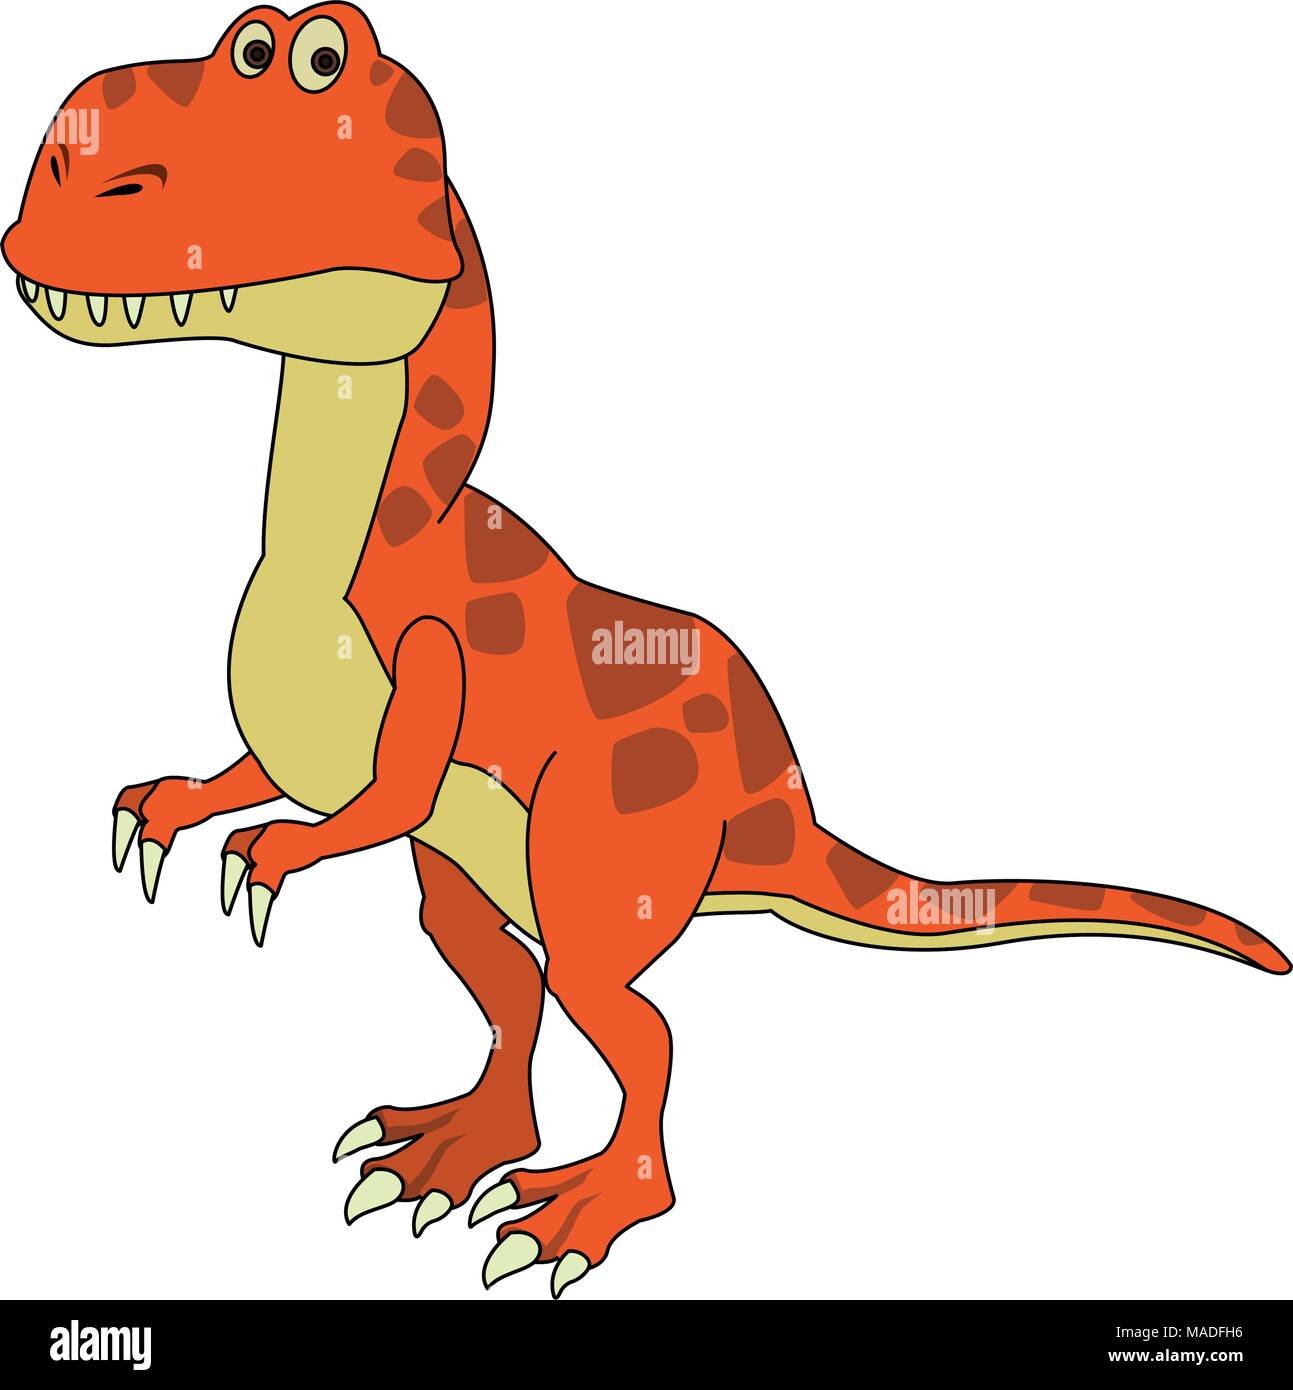 T rex pictures cartoon - Wasworthy